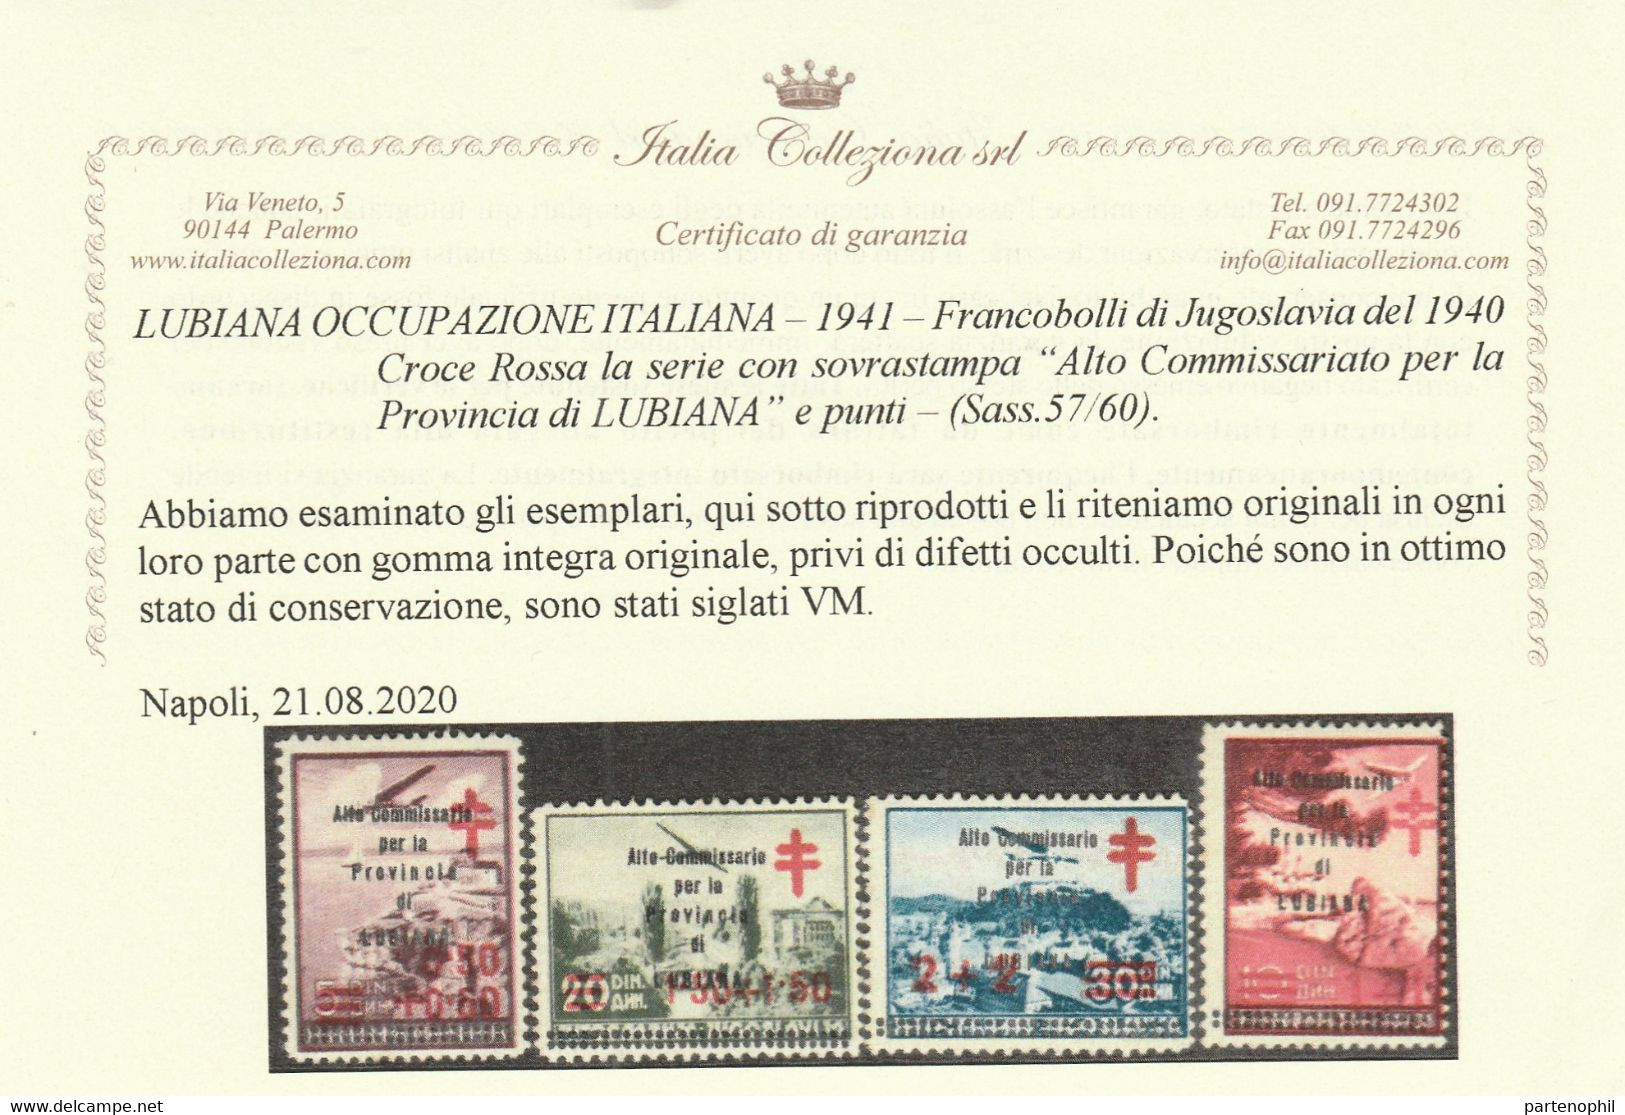 Lubiana - 243 - 1941 - Francobolli Di Jugoslavia Del 1940, Croce Rossa Di Posta Aerea Soprastampai N. 57/60. Cert. I.C. - Lubiana